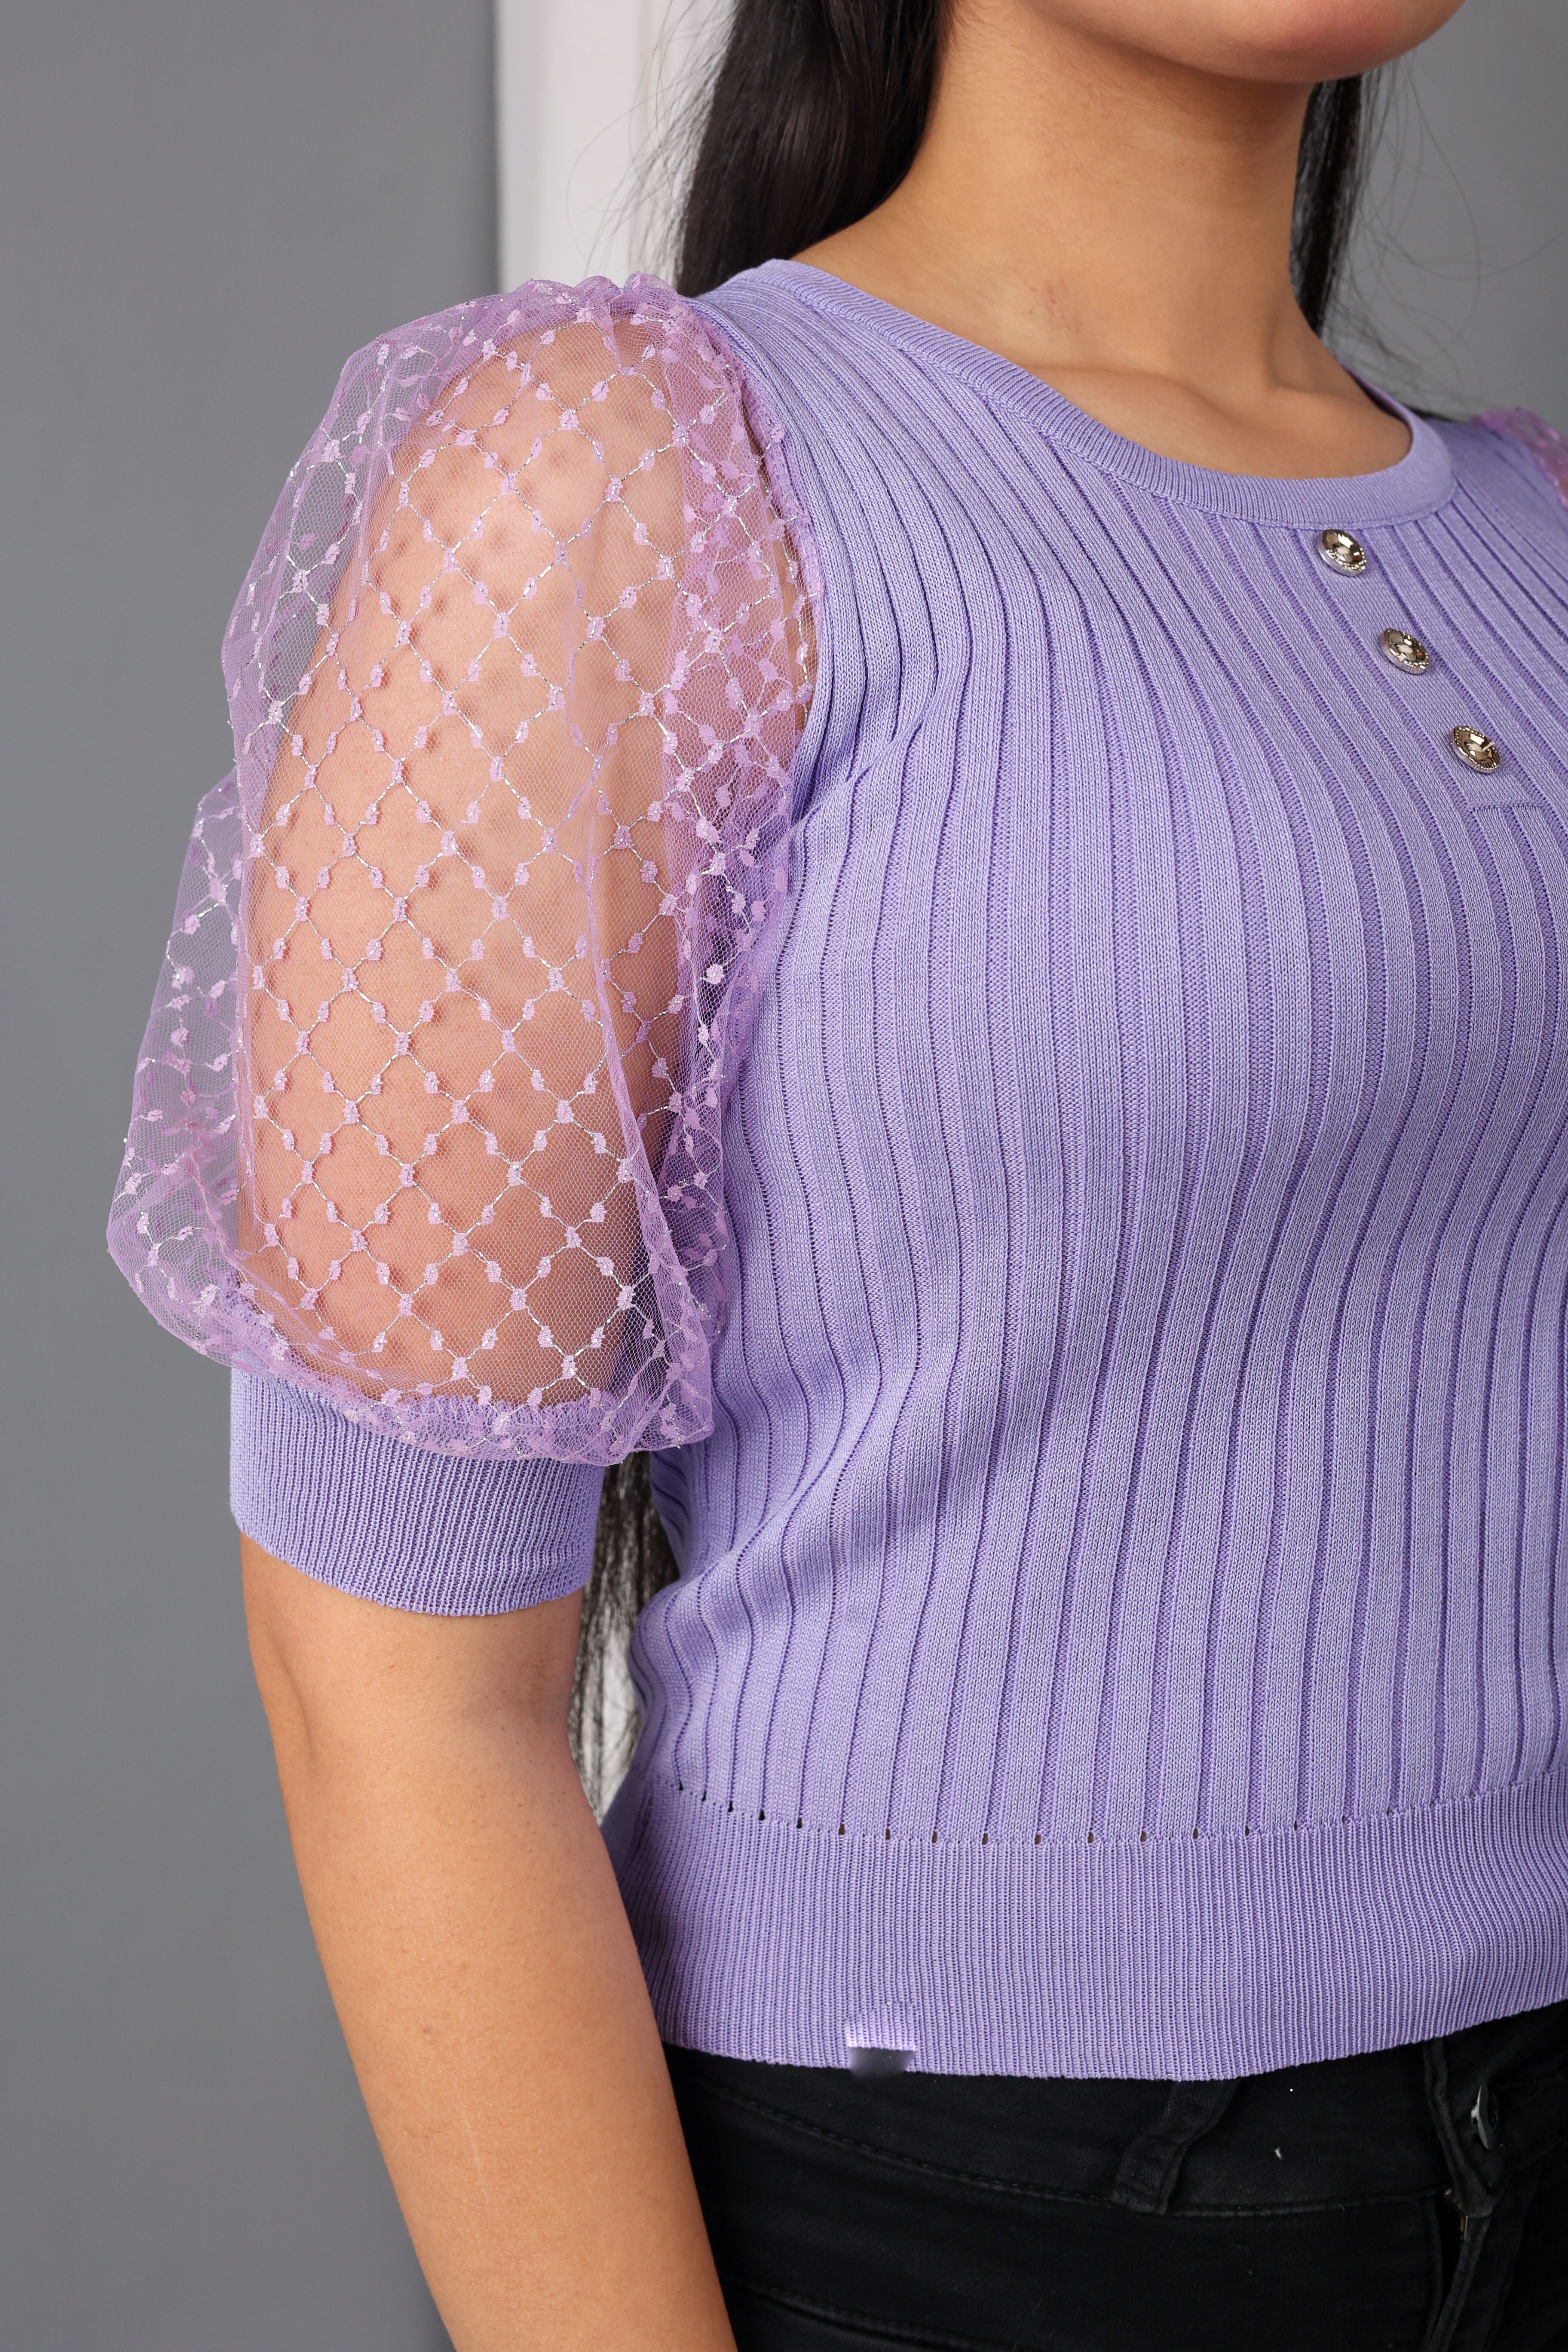 Cotton knit net sleeve top